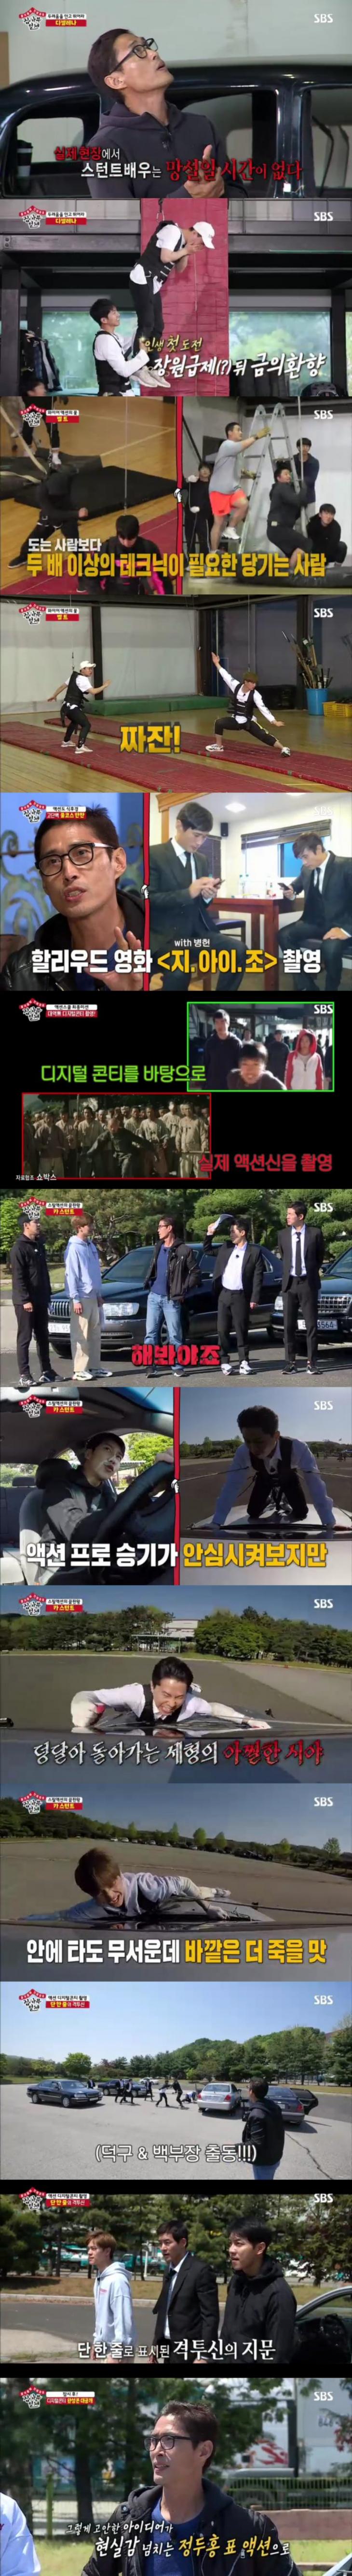 SBS ‘집사부일체’ 방송 캡처